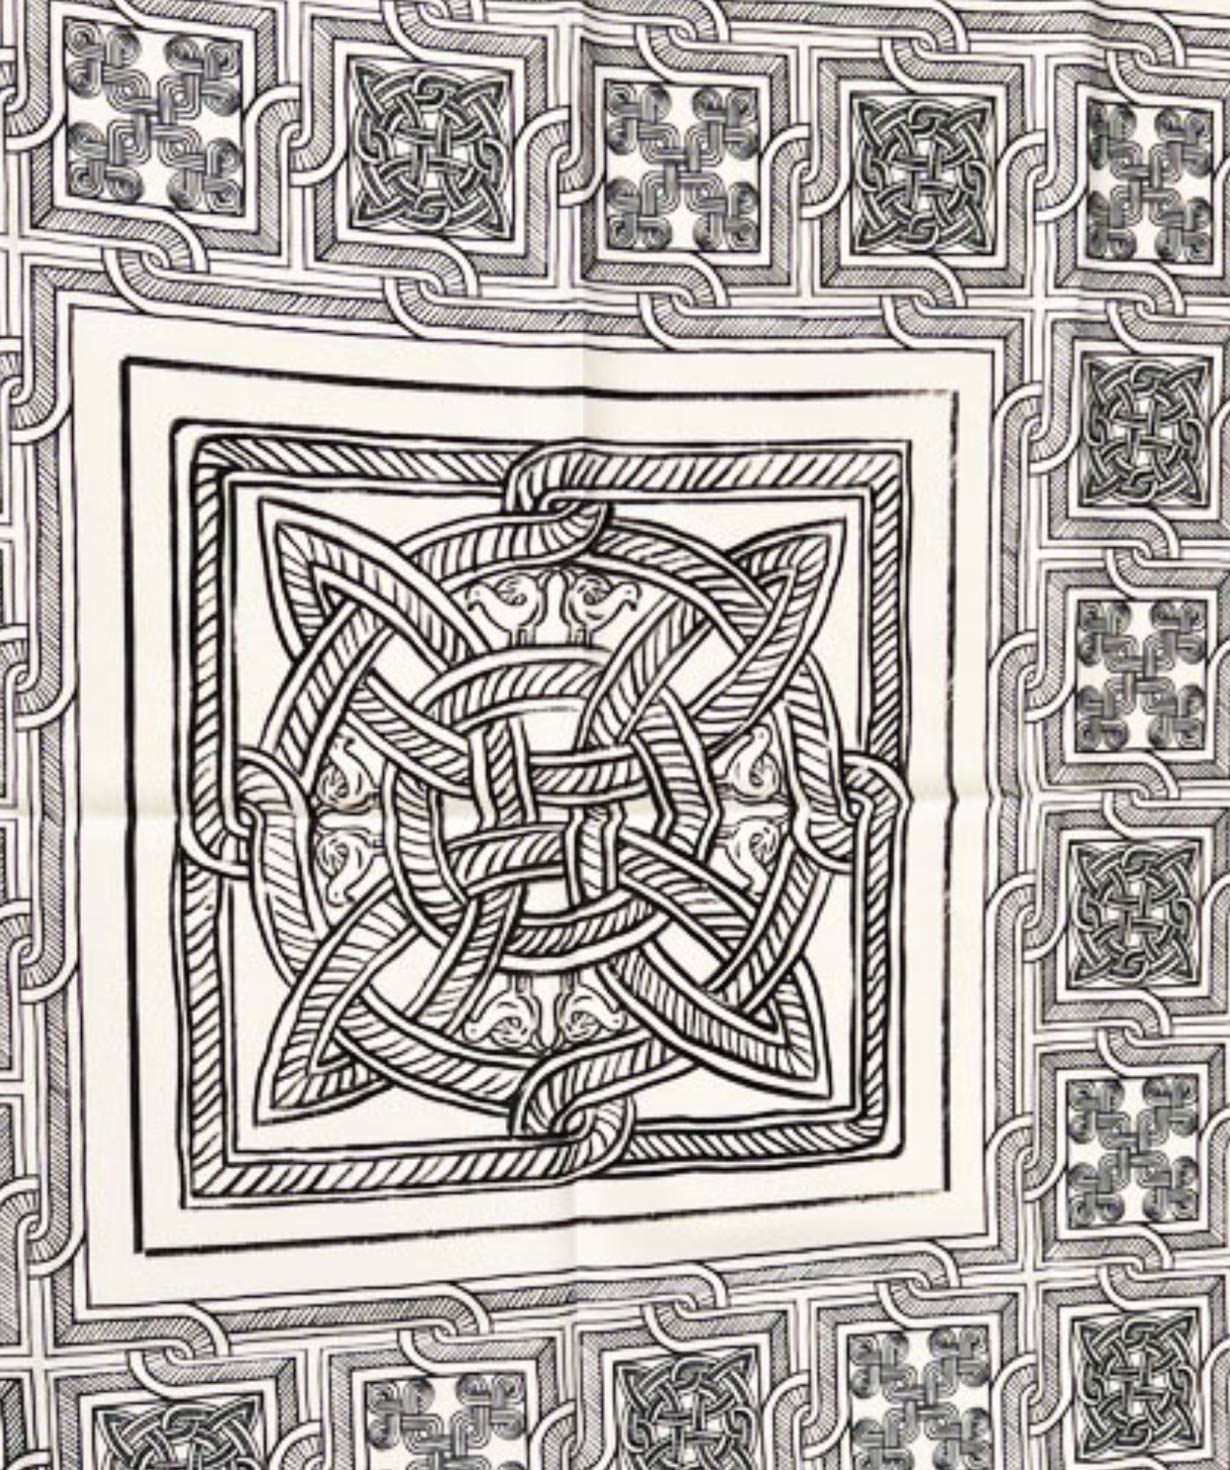 Шелковый платок `3 dzook` с армянскими орнаментами №4